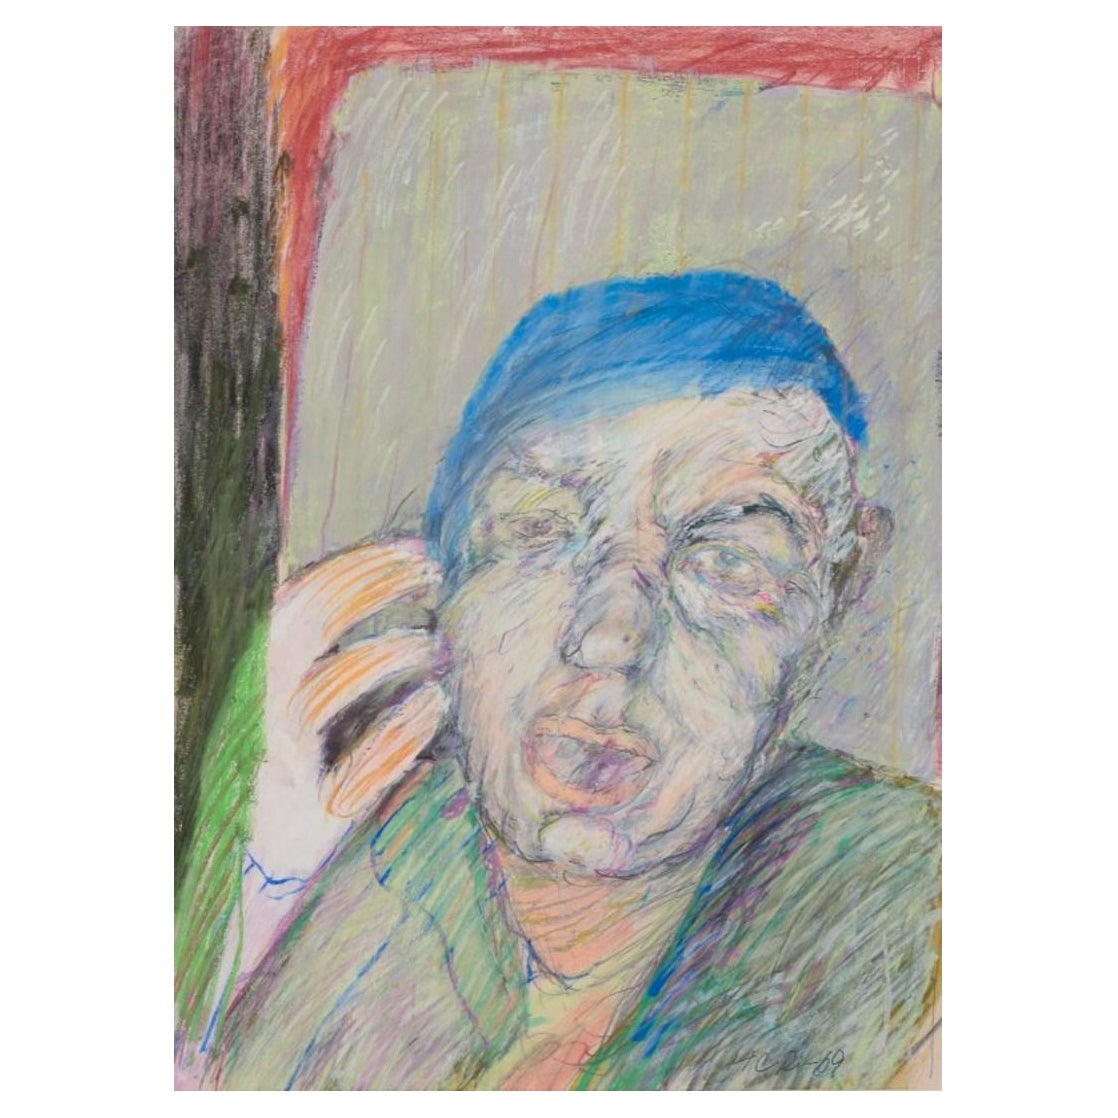 Hans Christian Rylander. Colored pencil on paper. Portrait of a man. For Sale